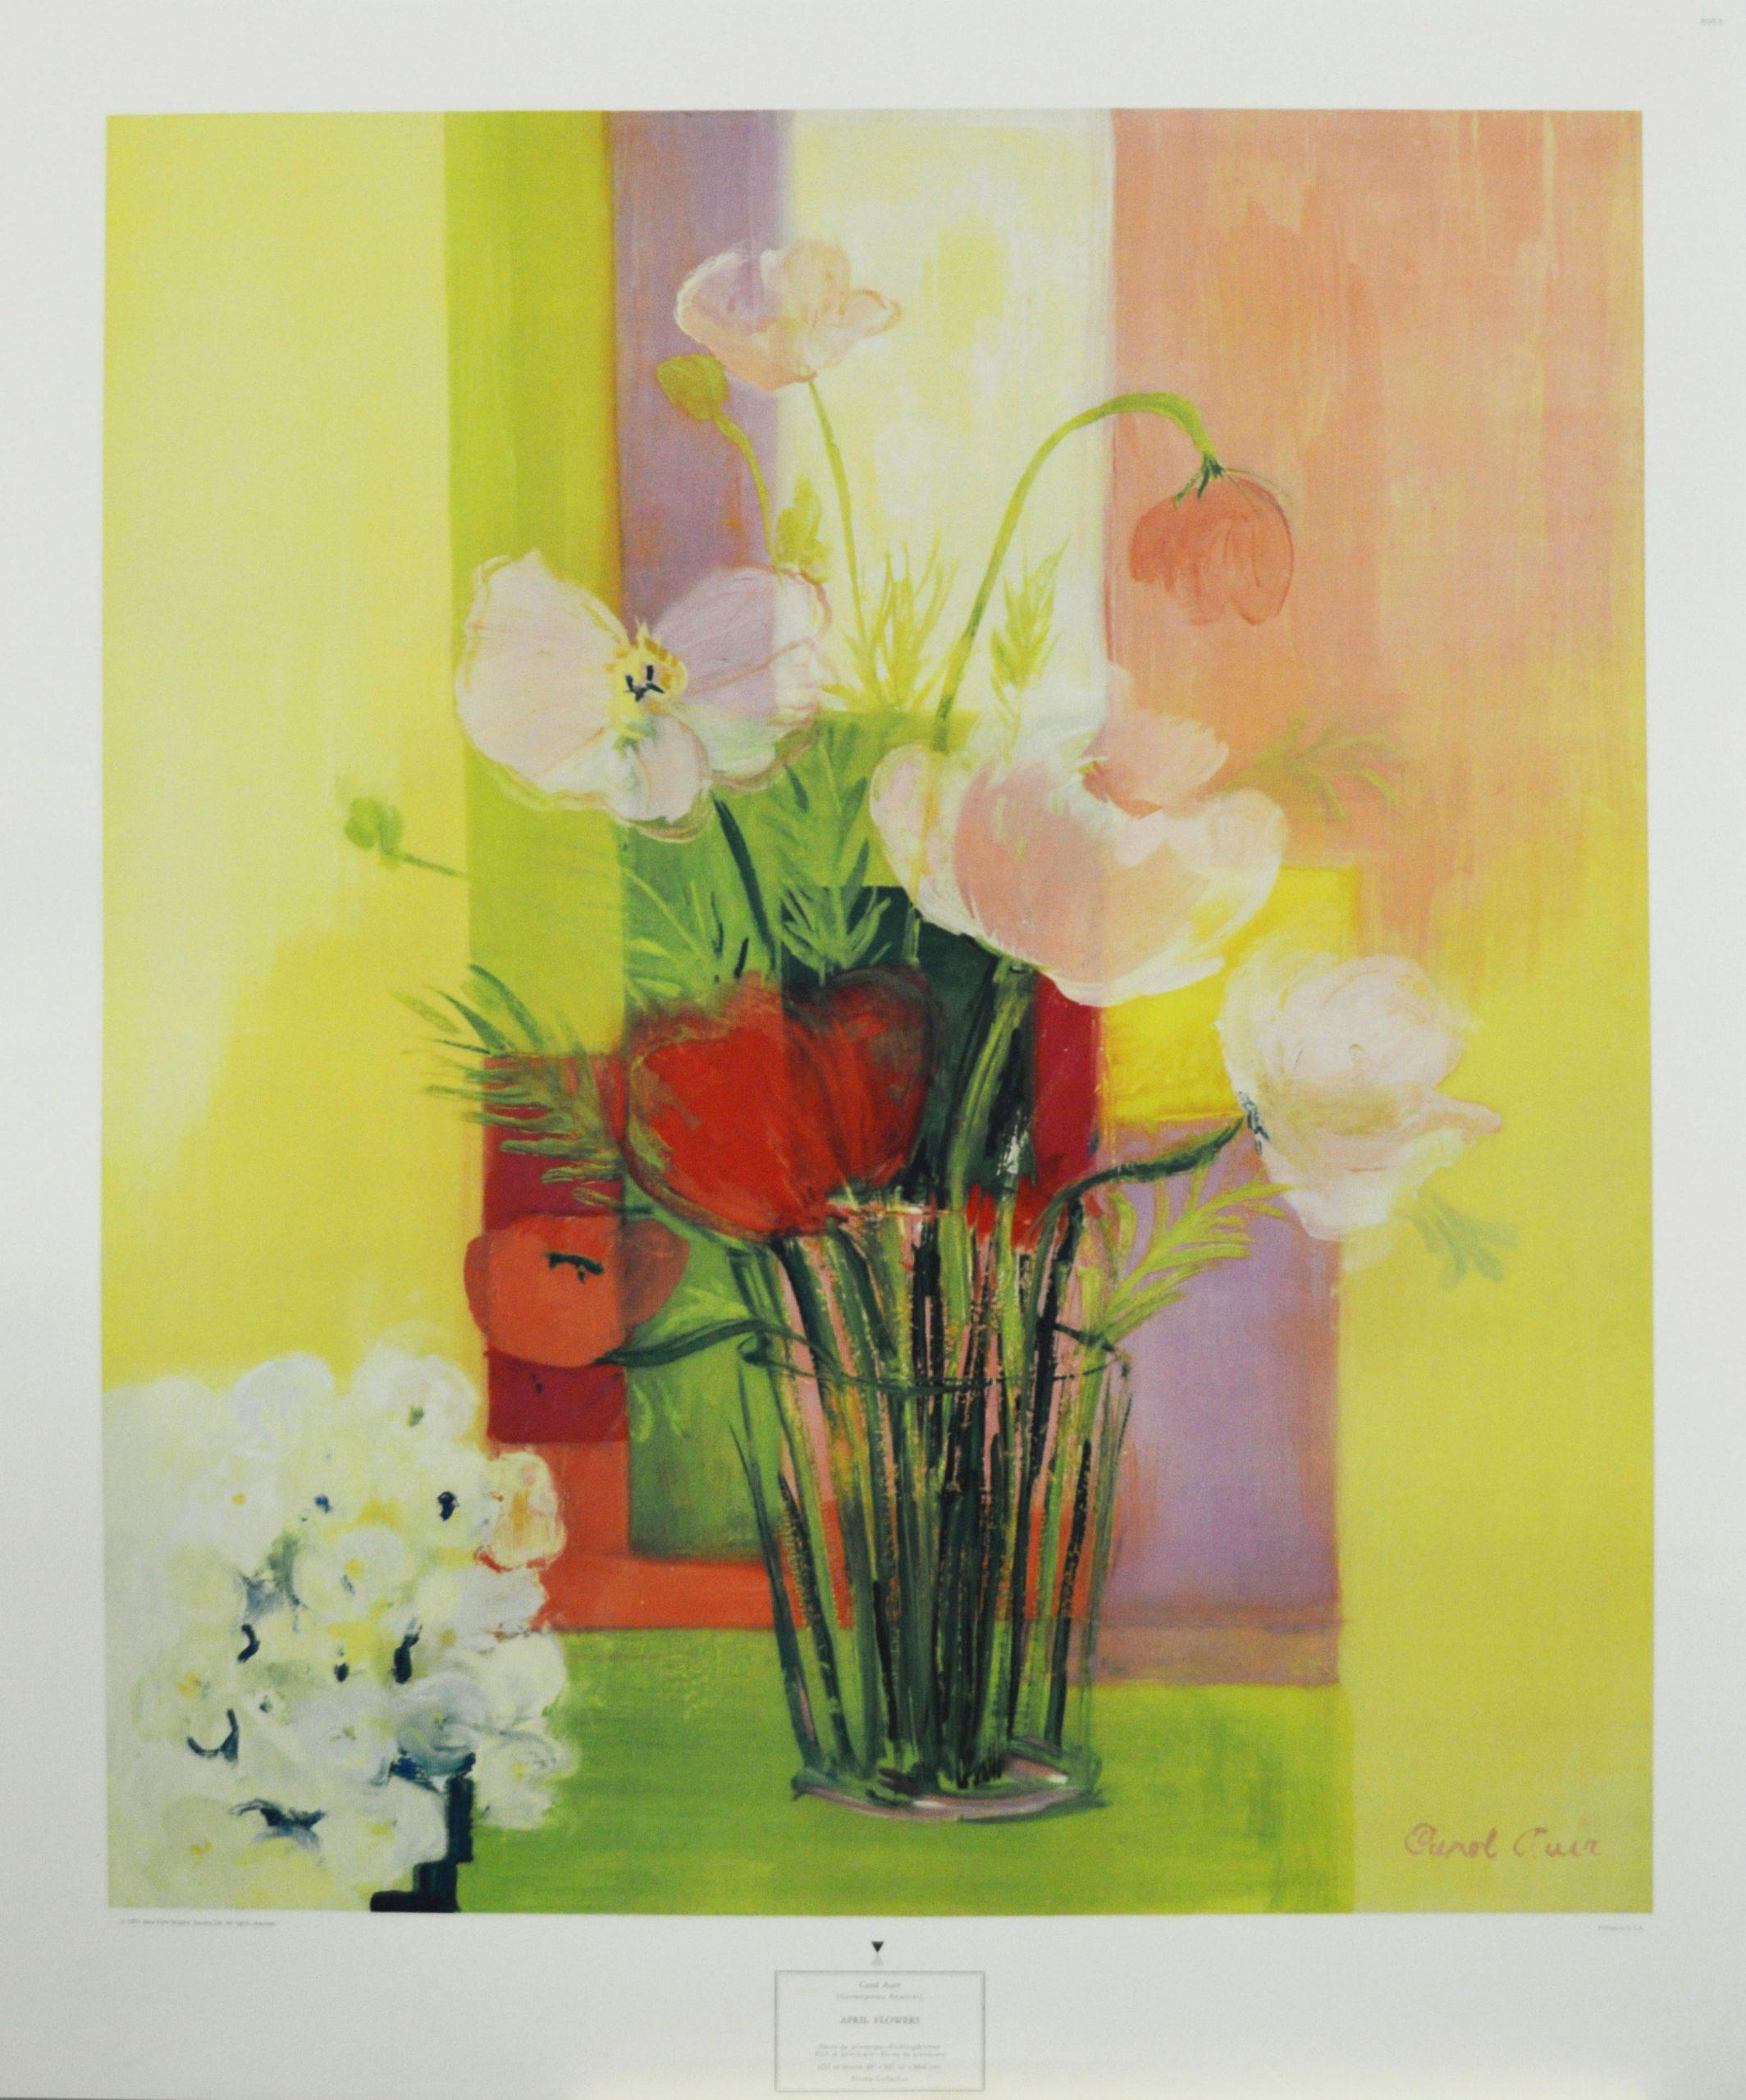 Carol Auer Still-Life Print - “April Flowers” Poster. New York Graphic Society, Ltd. Printed in U.S.A.